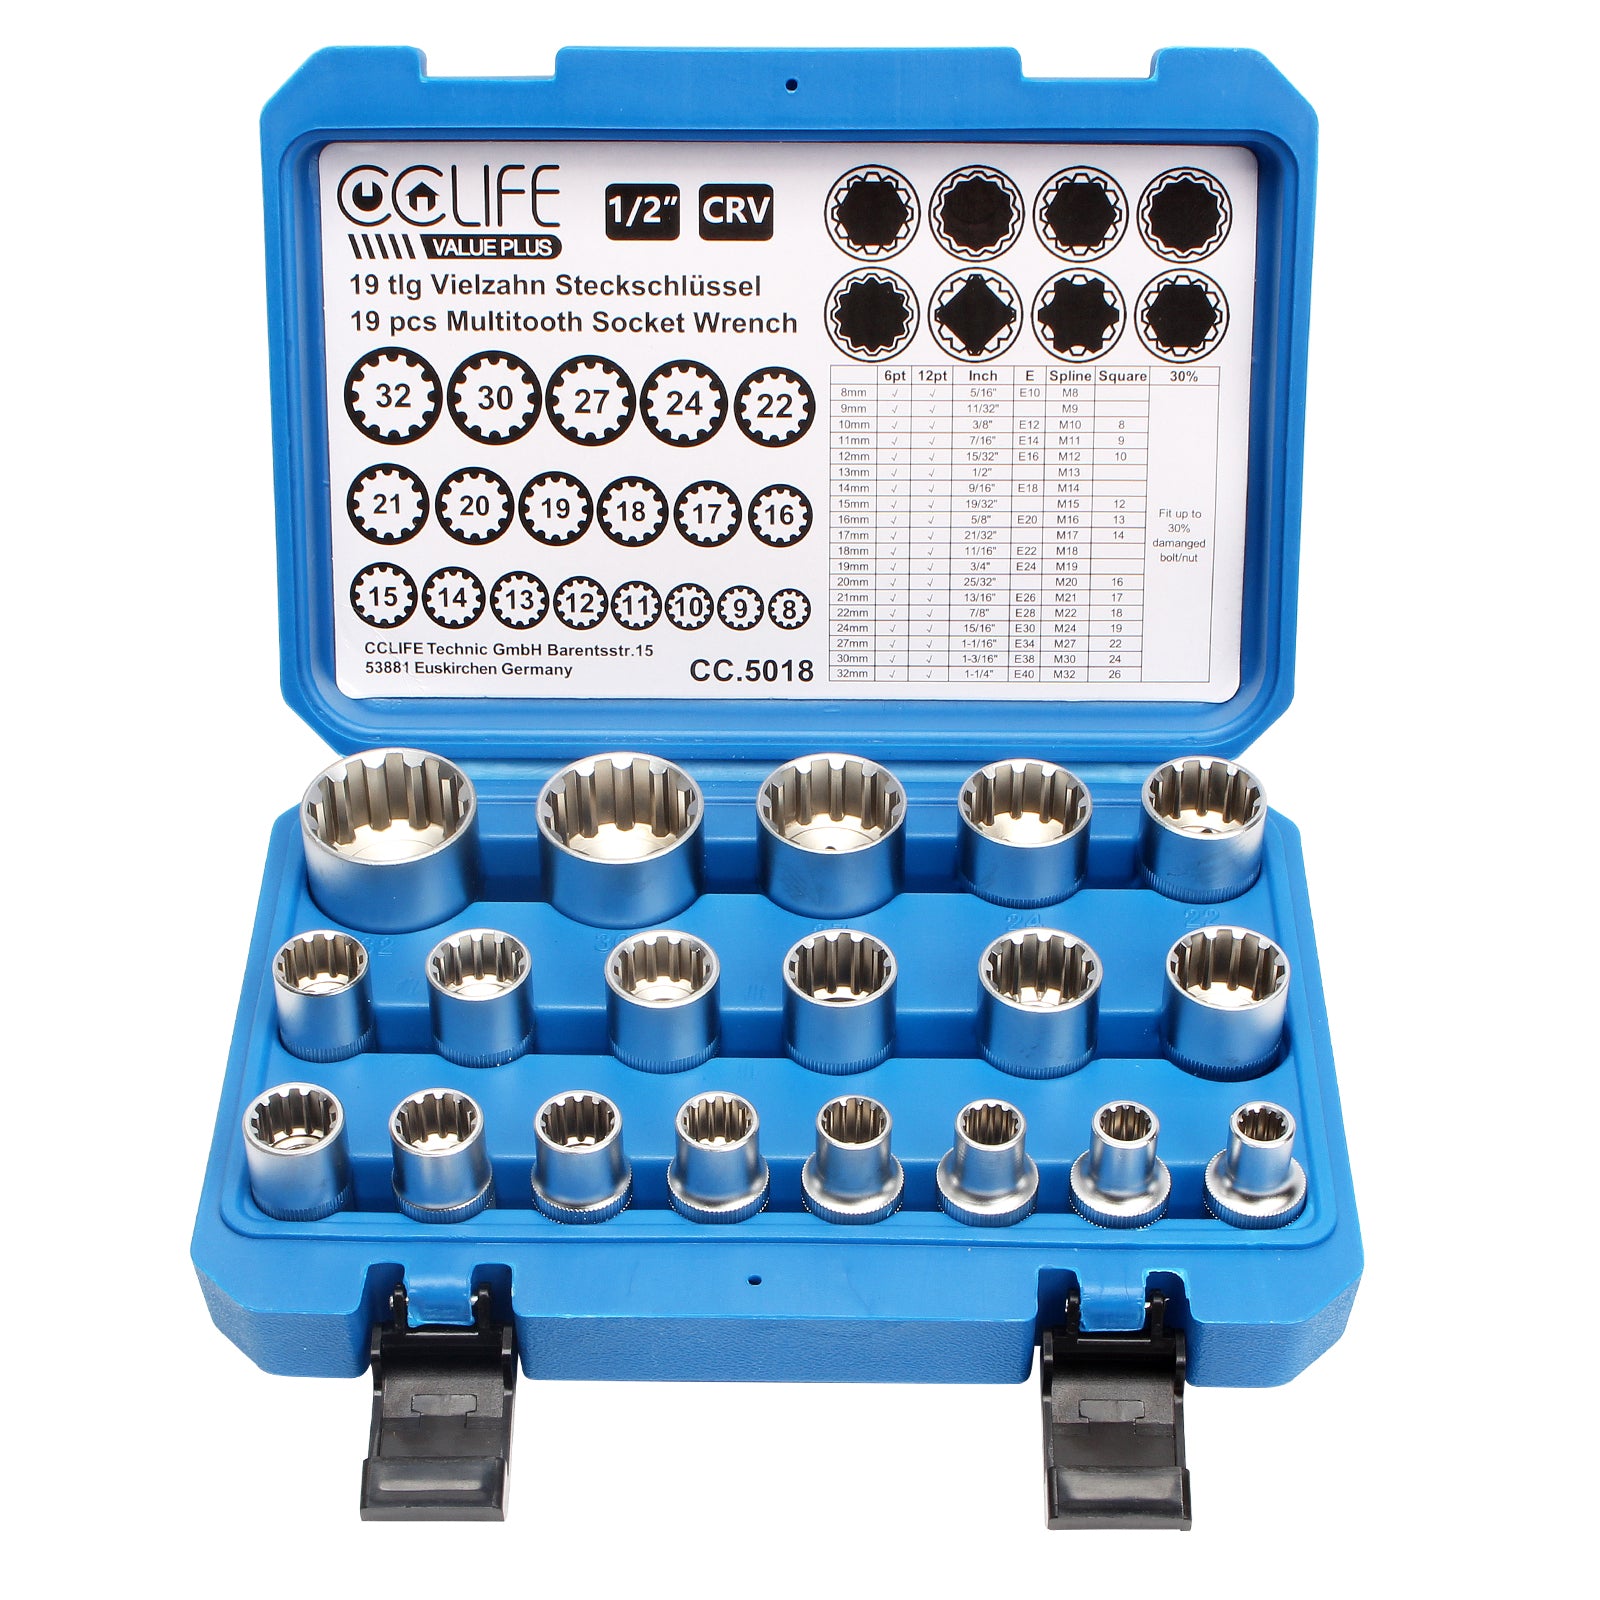 12 point Gear Lock Spline Socket Wrench Set 1/2 8-32 Multi-tooth 19 pieces